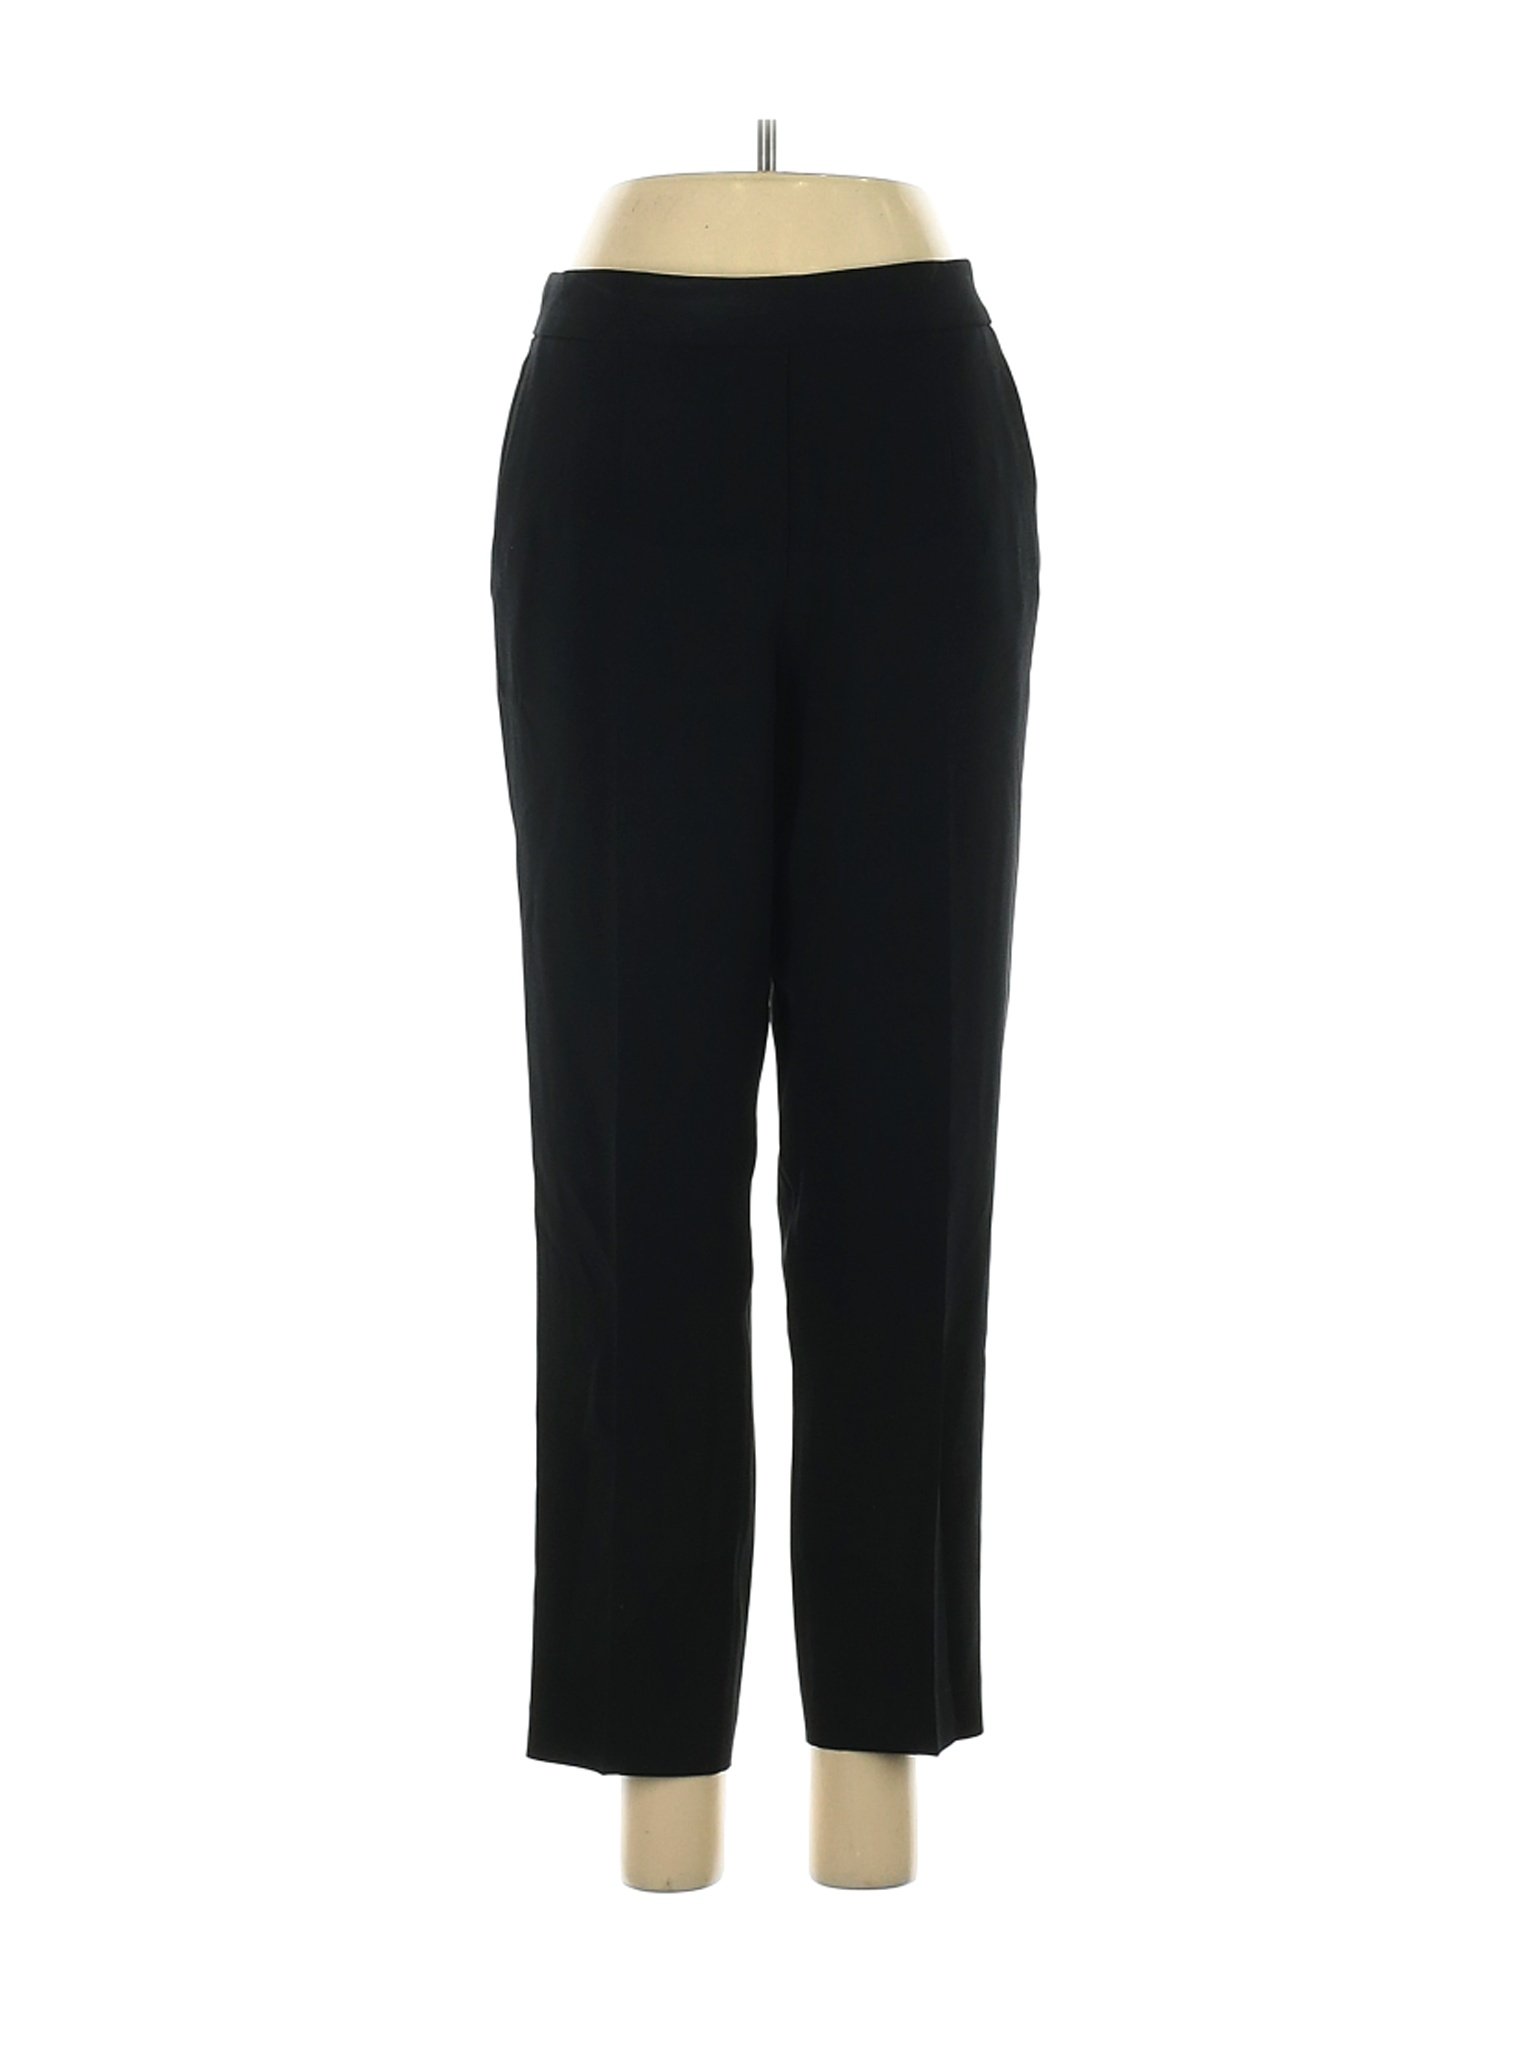 Babaton Women Black Casual Pants 8 | eBay